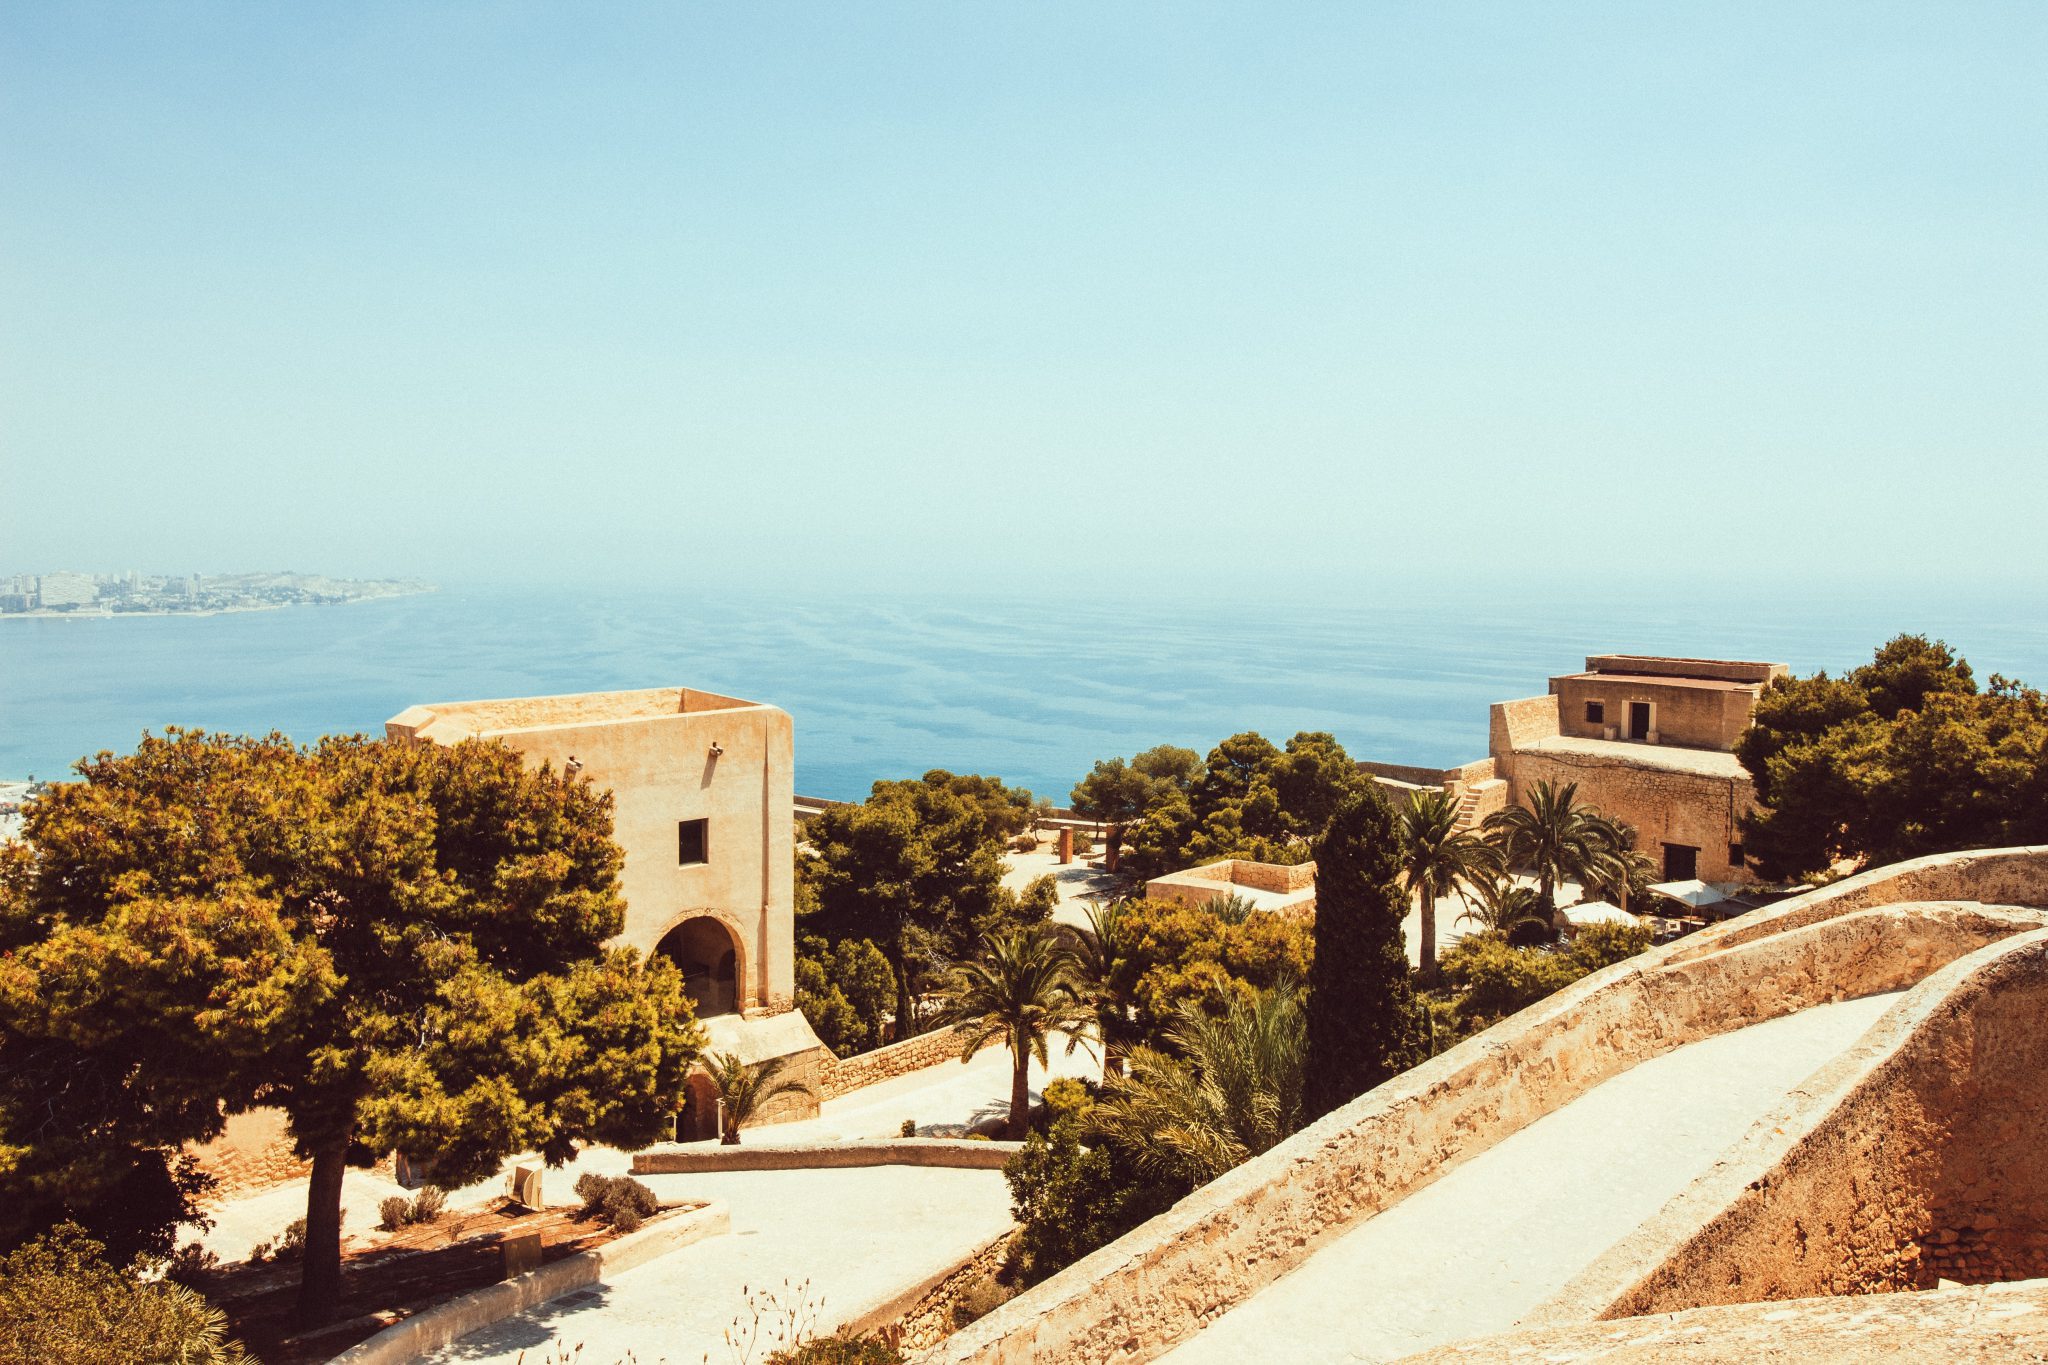 Views over the sea in Malaga, Spain - Image by Elvis Bekmanis